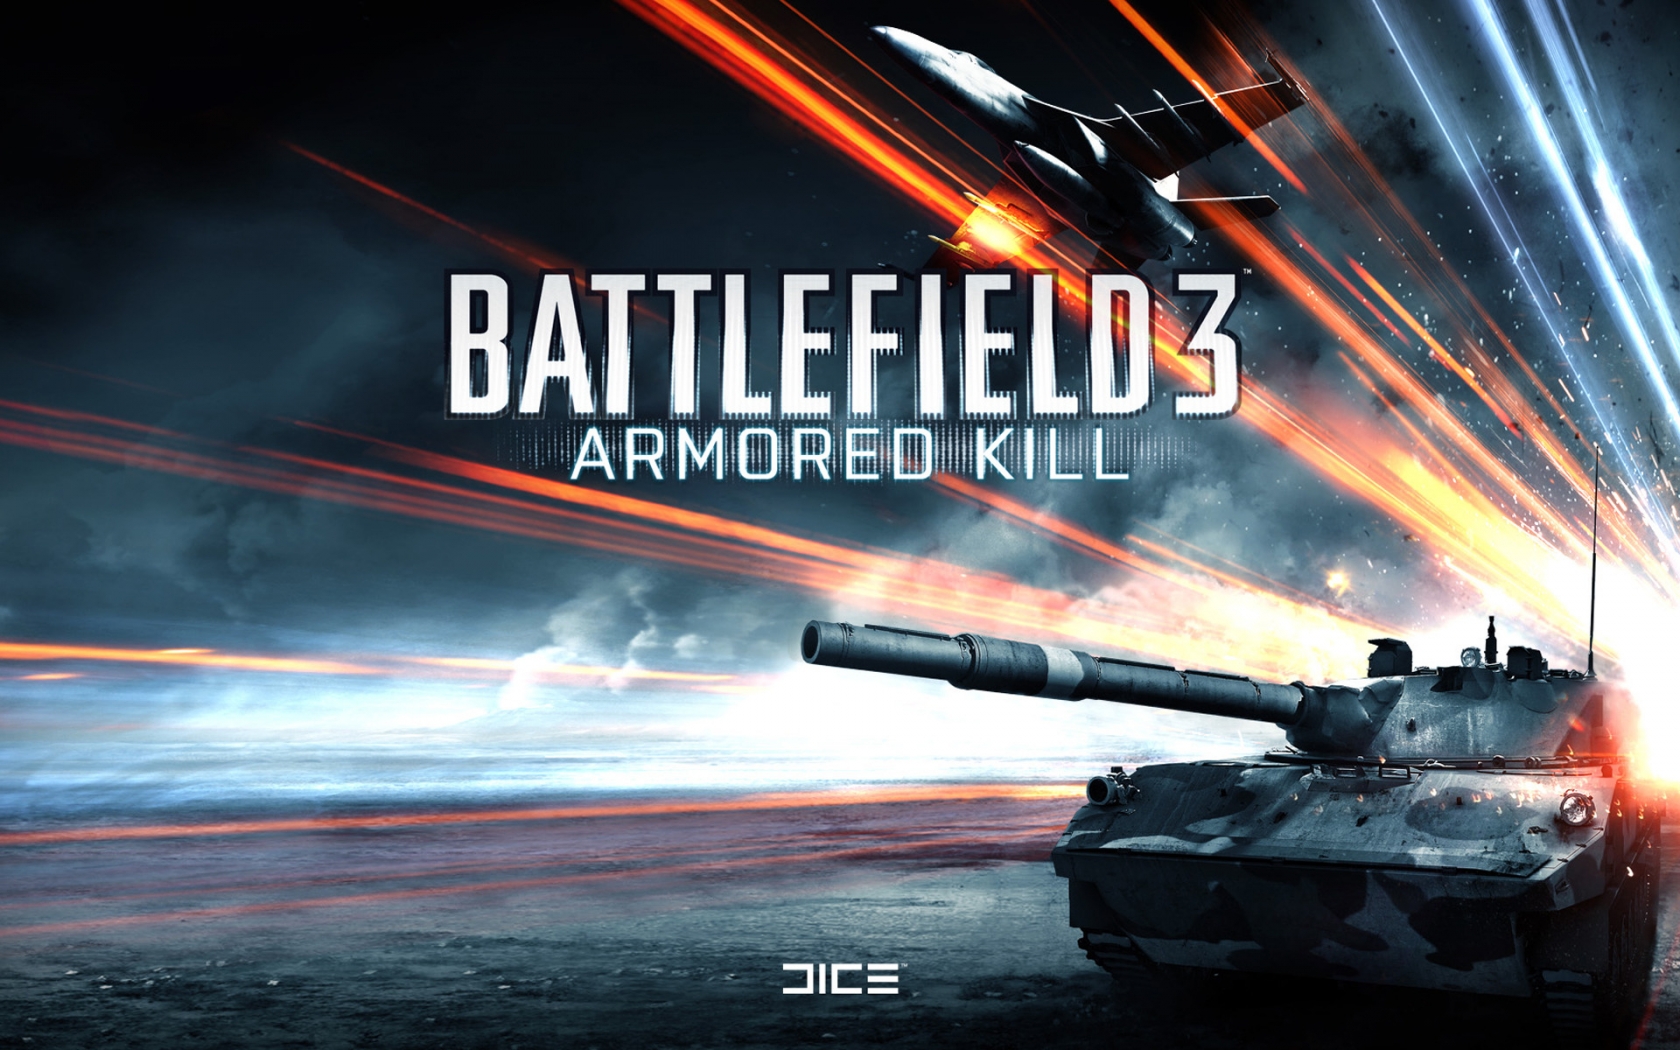 Battlefield 3 Armored Kill for 1680 x 1050 widescreen resolution